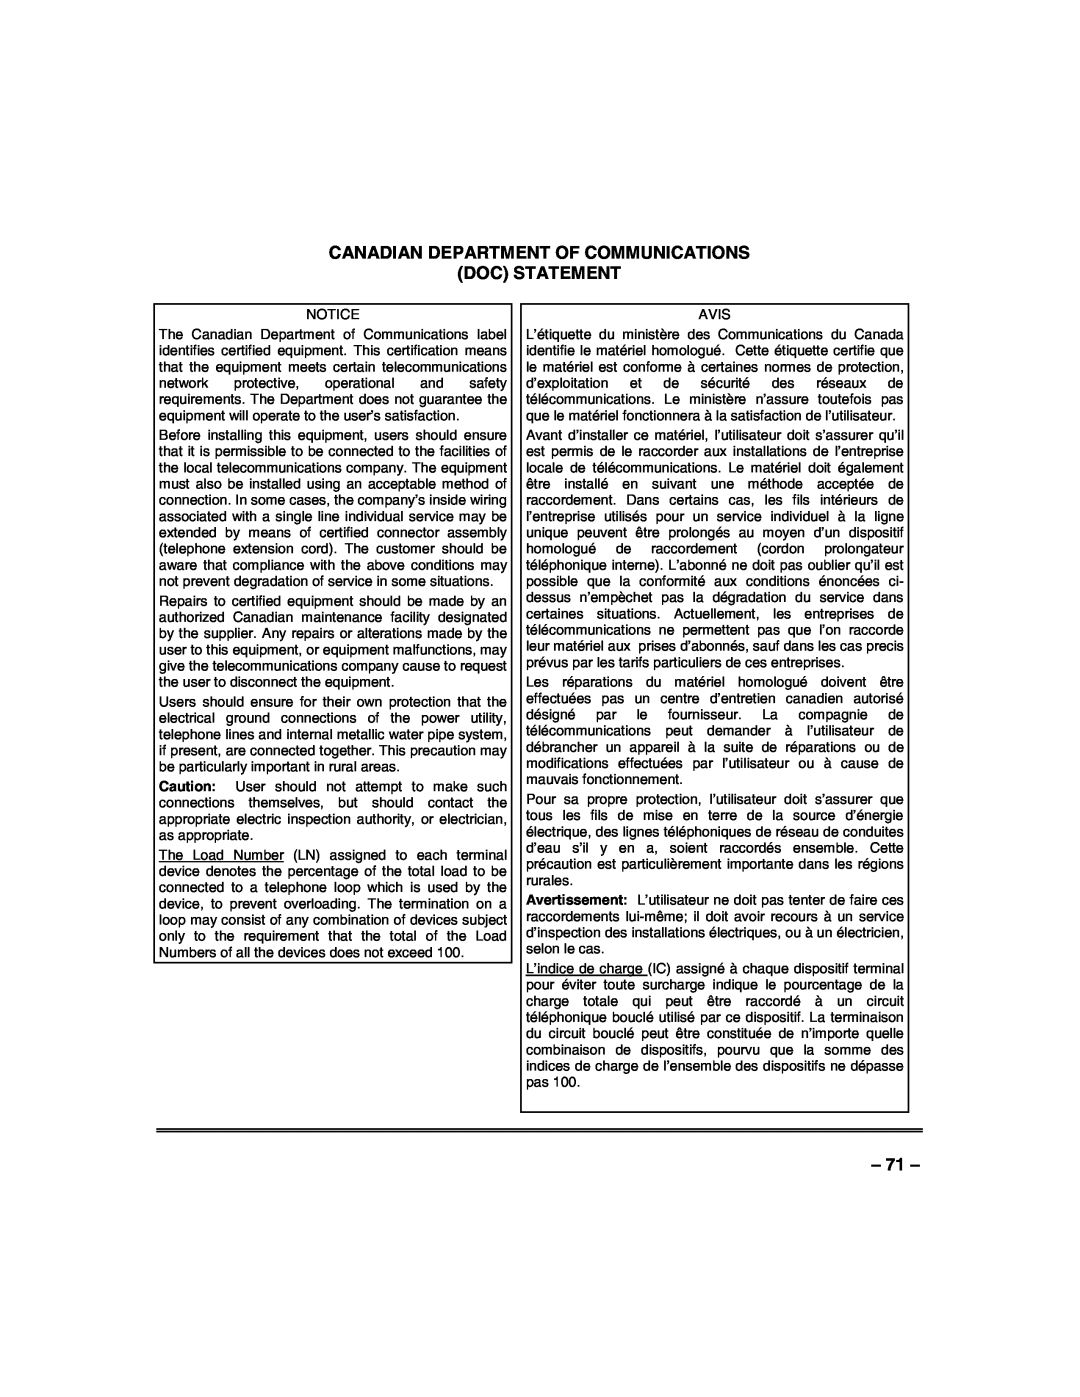 Honeywell VISTA-128FBP, VISTA-250FBP manual Canadian Department Of Communications, Doc Statement 